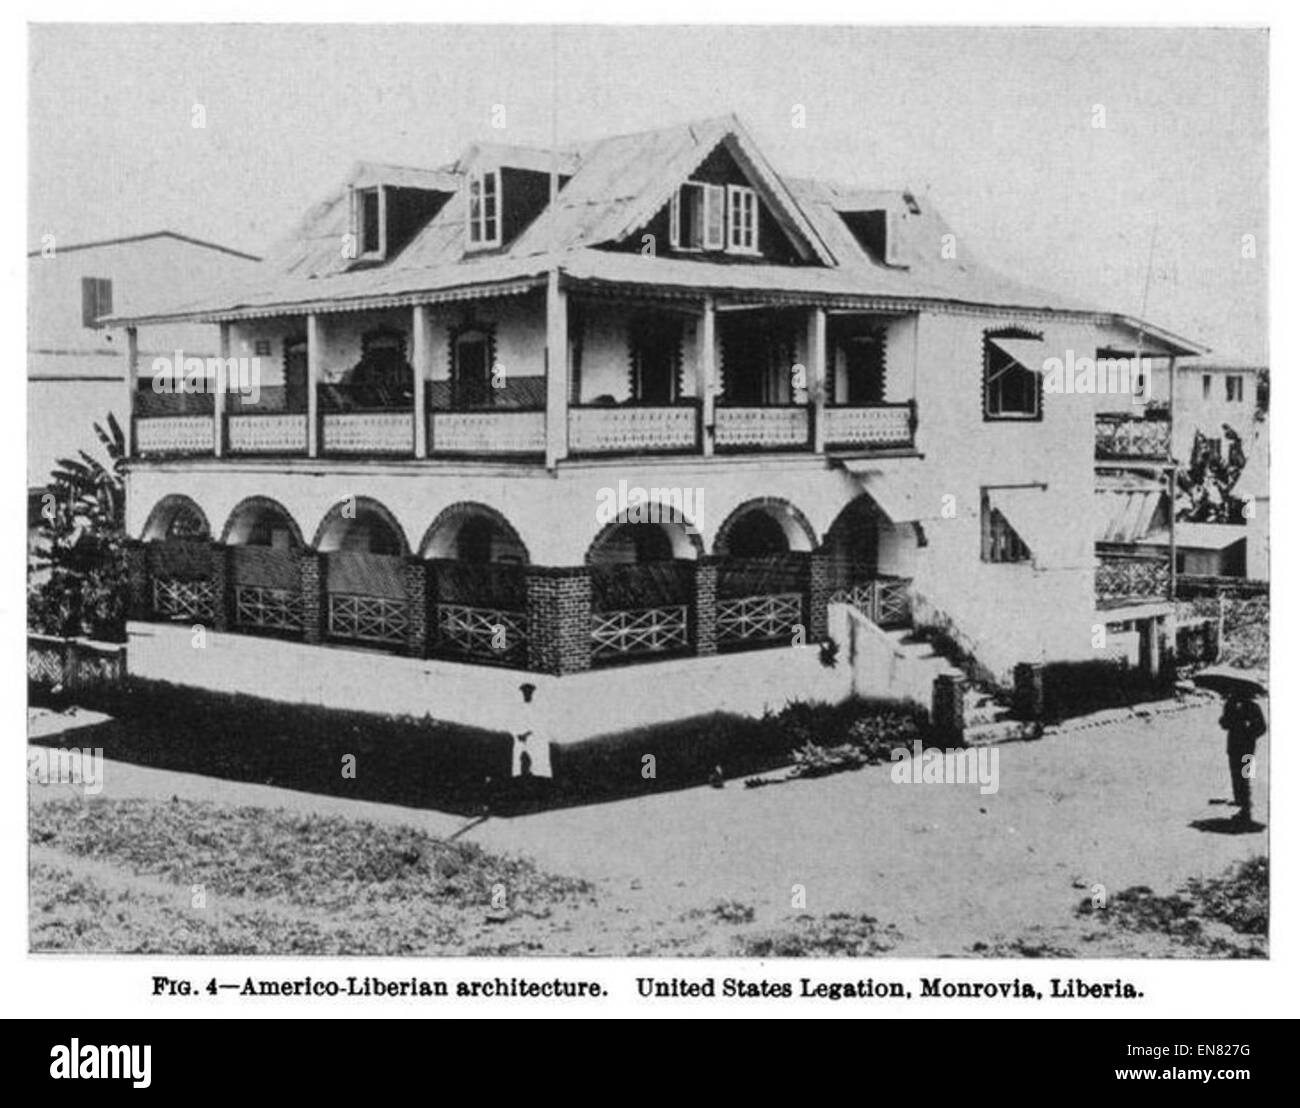 Ross(1919) Abb. 4 Ameriko-liberianische Architektur. Vereinigten Staaten Gesandtschaft, Monrovia, Liberia Stockfoto